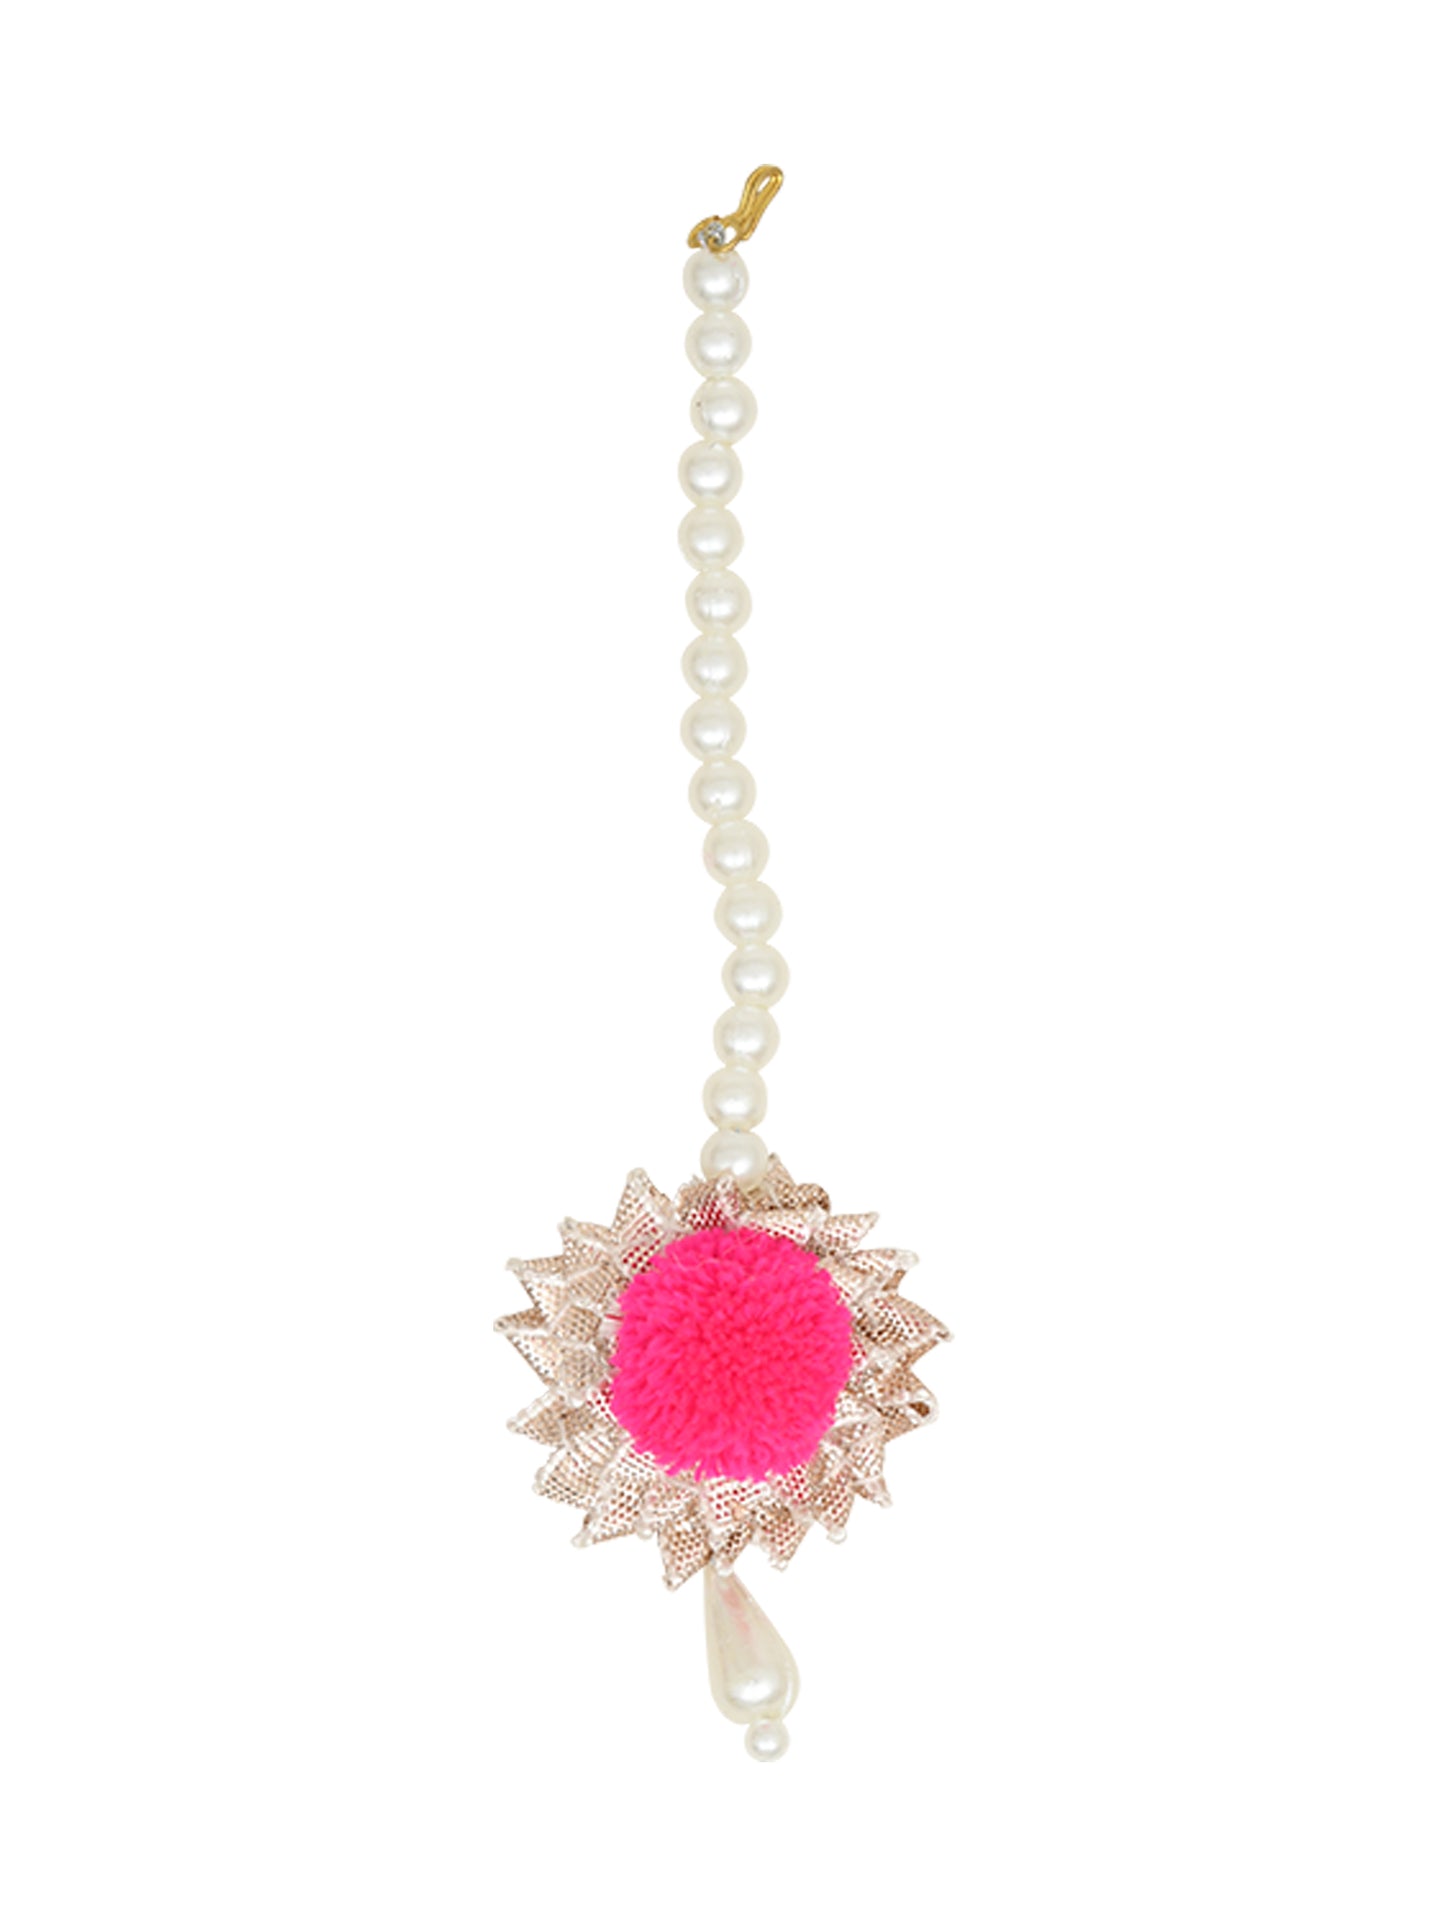 Pink Pom Pom Jewellery for Girls (Set Pack of 4)